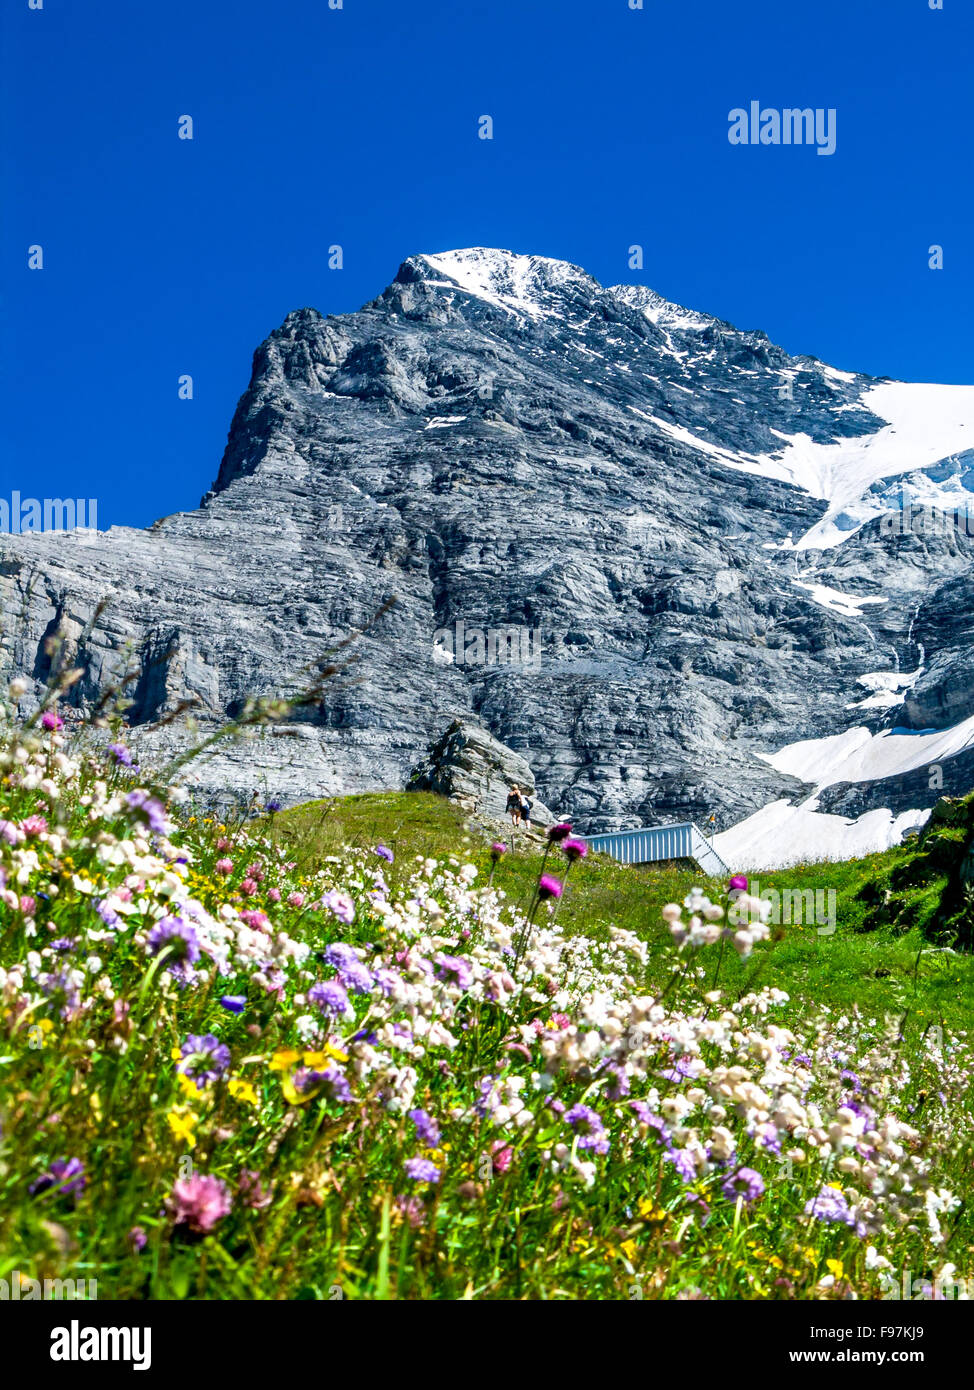 Eiger, Switzerland. One of amazing mountain peaks in Berner Oberland part of European Alps, main landmark of Swiss Confederation Stock Photo